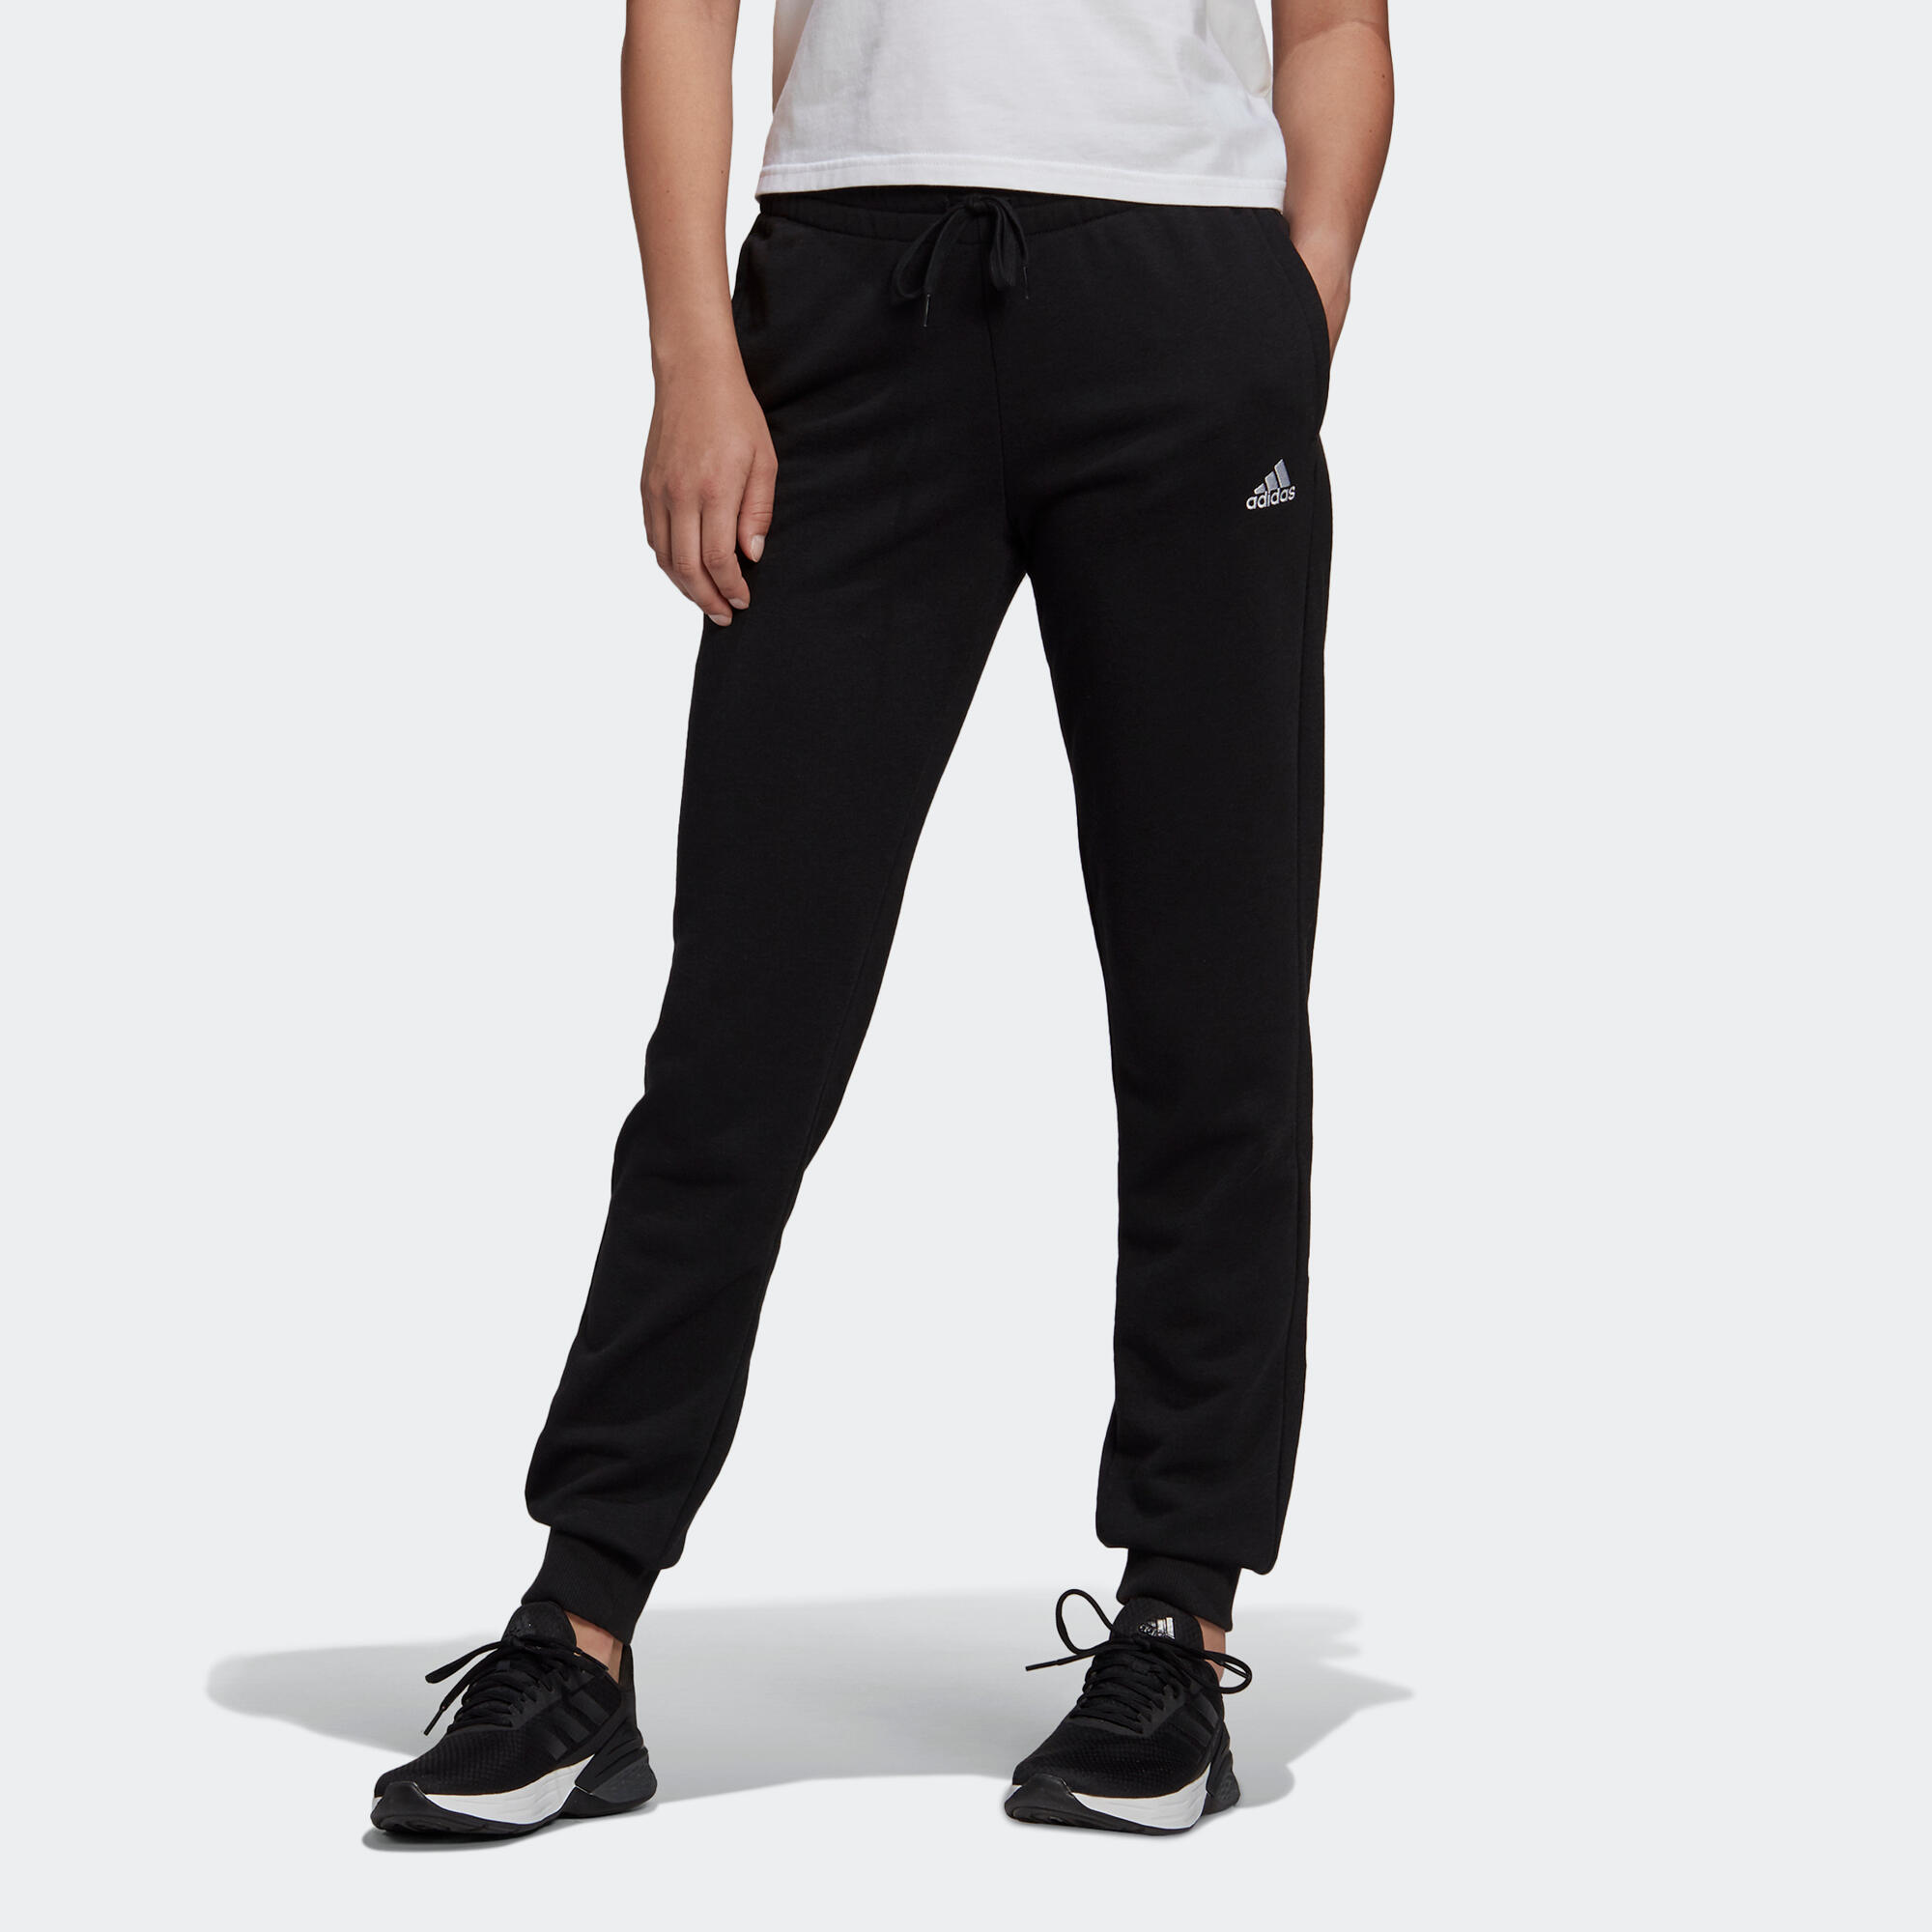 Adidas Women's Fitness Majority Cotton Slim Jogging Bottoms - Linear Black